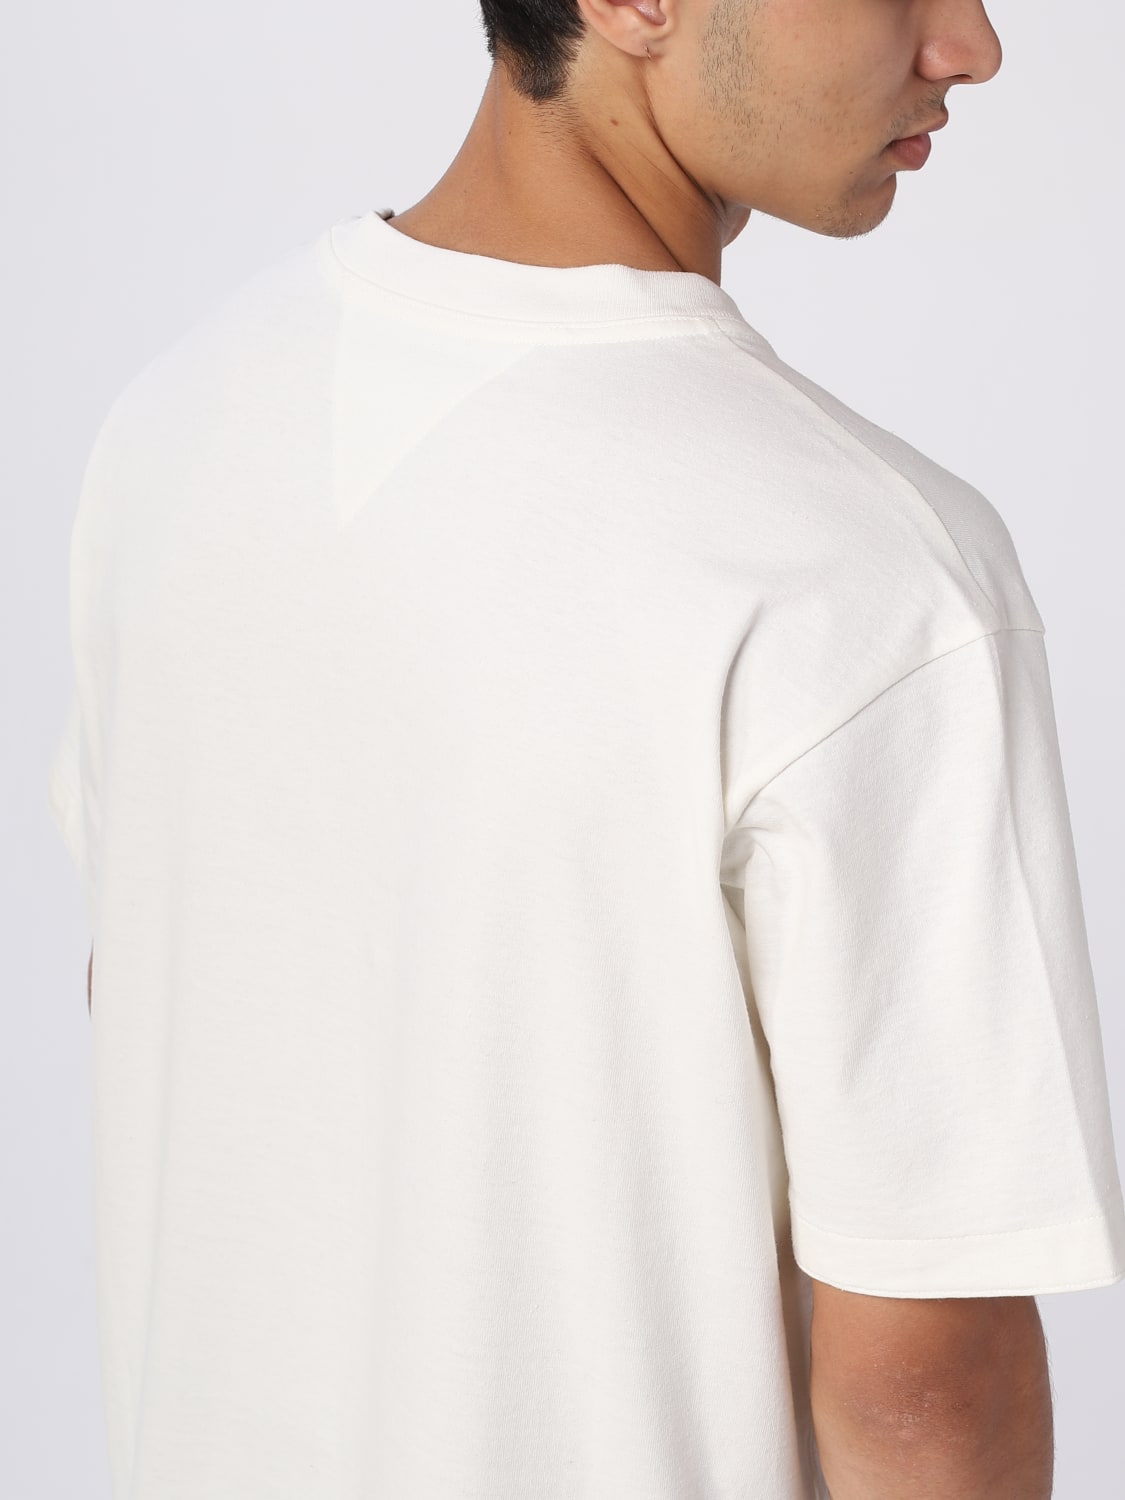 BOTTEGA VENETA: t-shirt for man - White | Bottega Veneta t-shirt ...